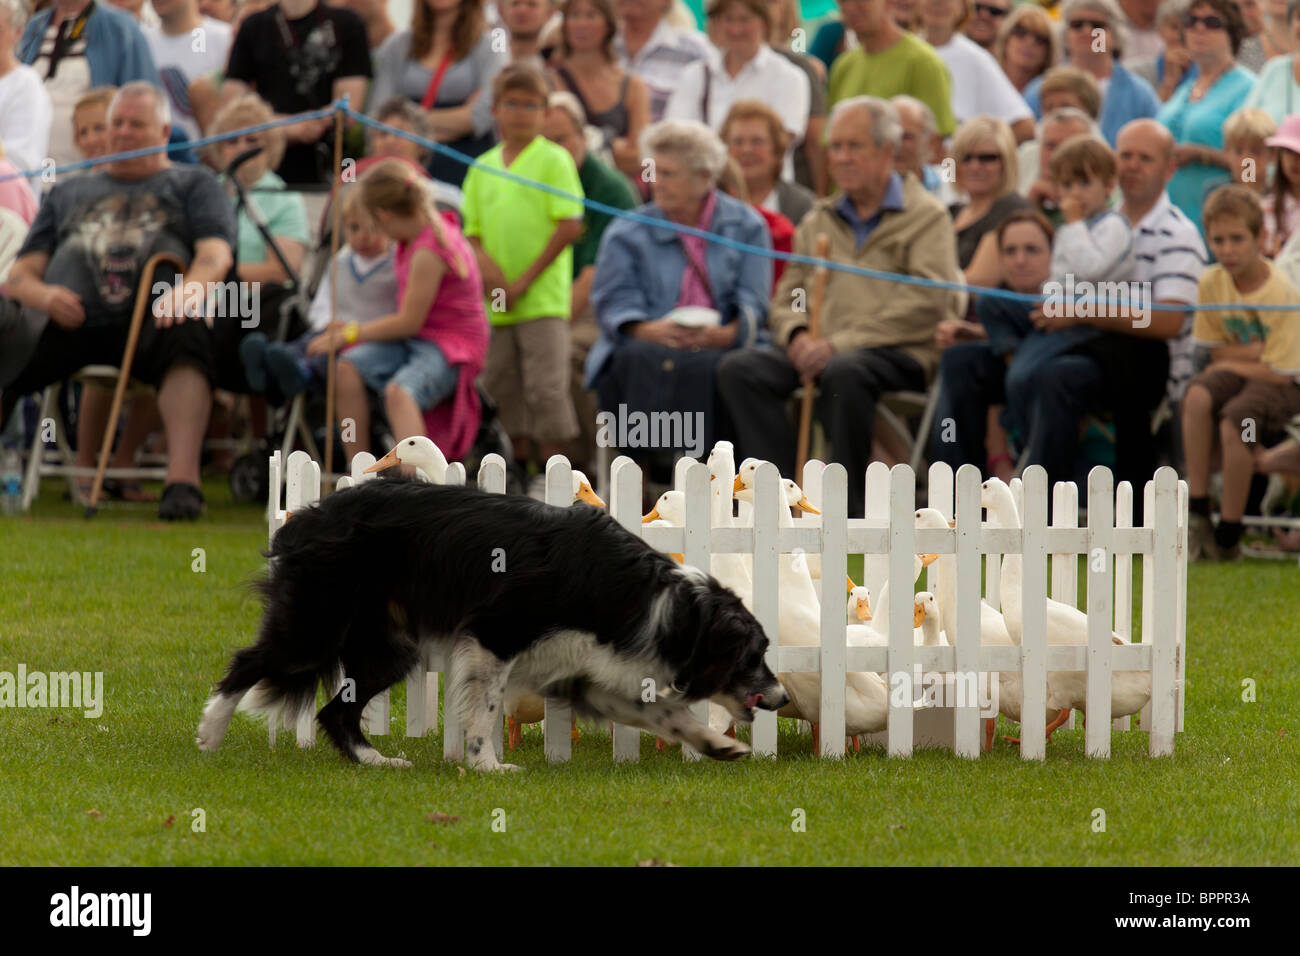 sheepdog trial demonstartion at country fair using indian runner ducks Stock Photo